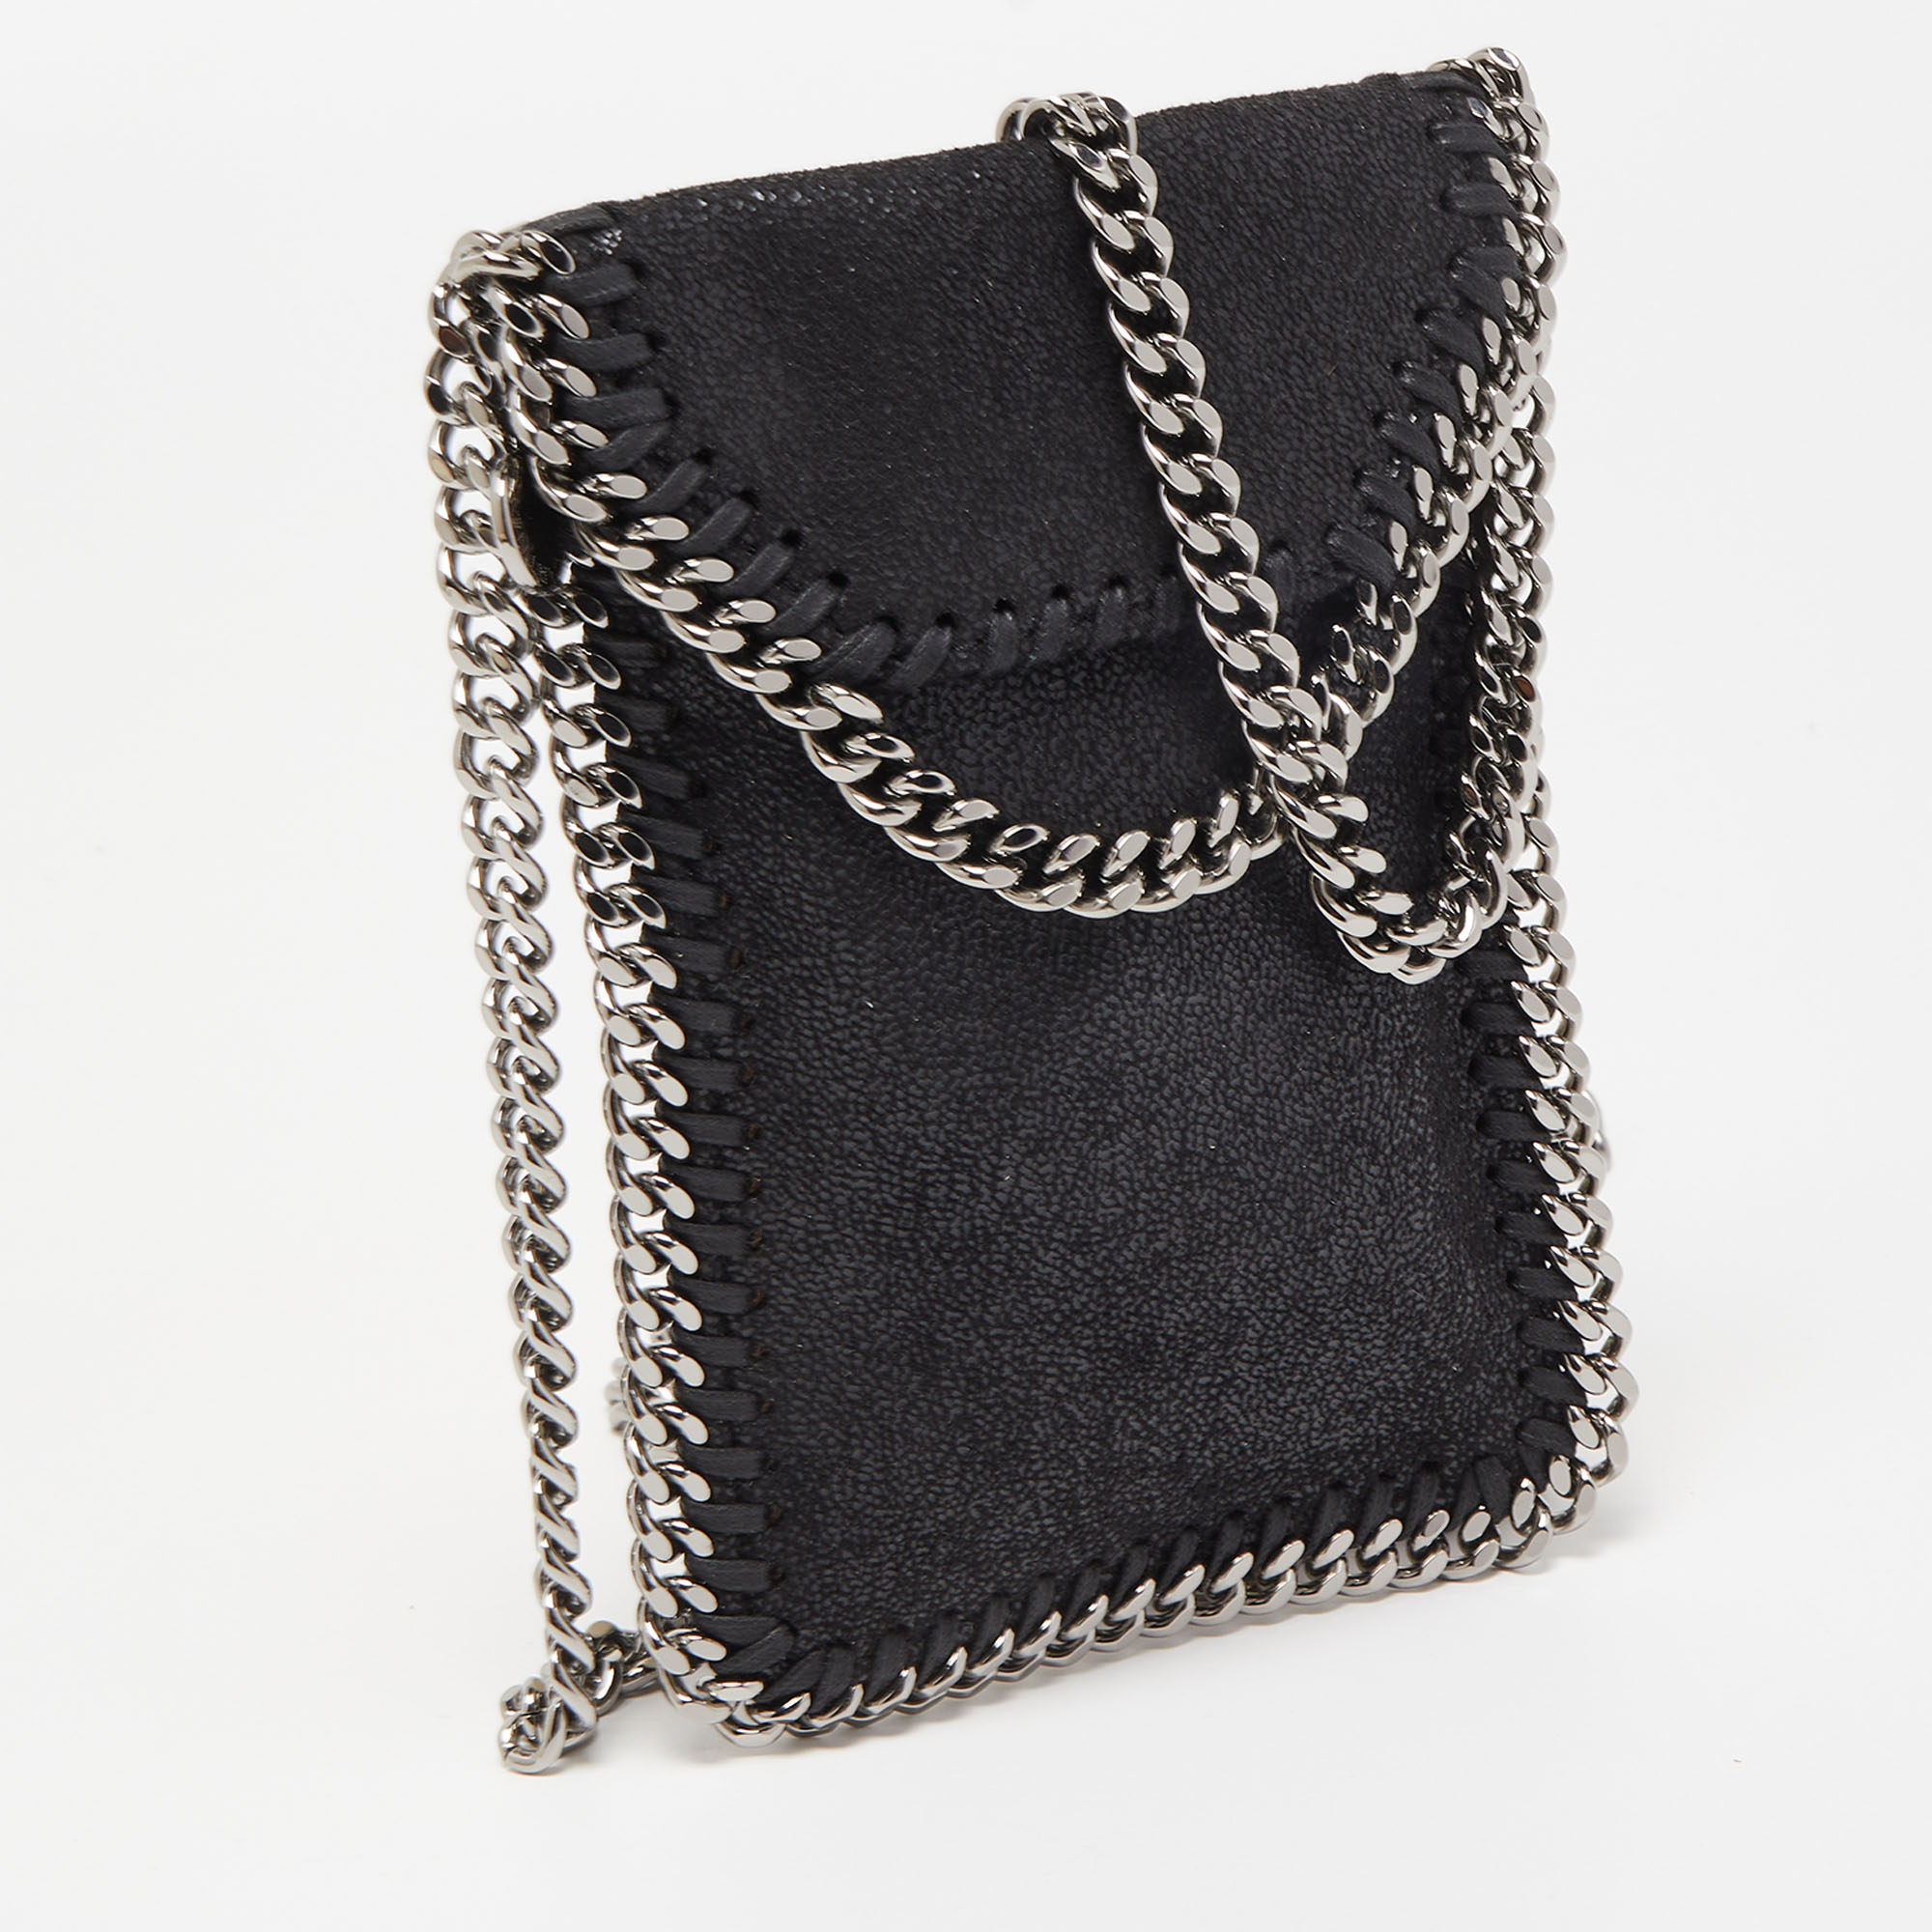 Stella McCartney Black Faux Leather Falabella Phone Crossbody Bag